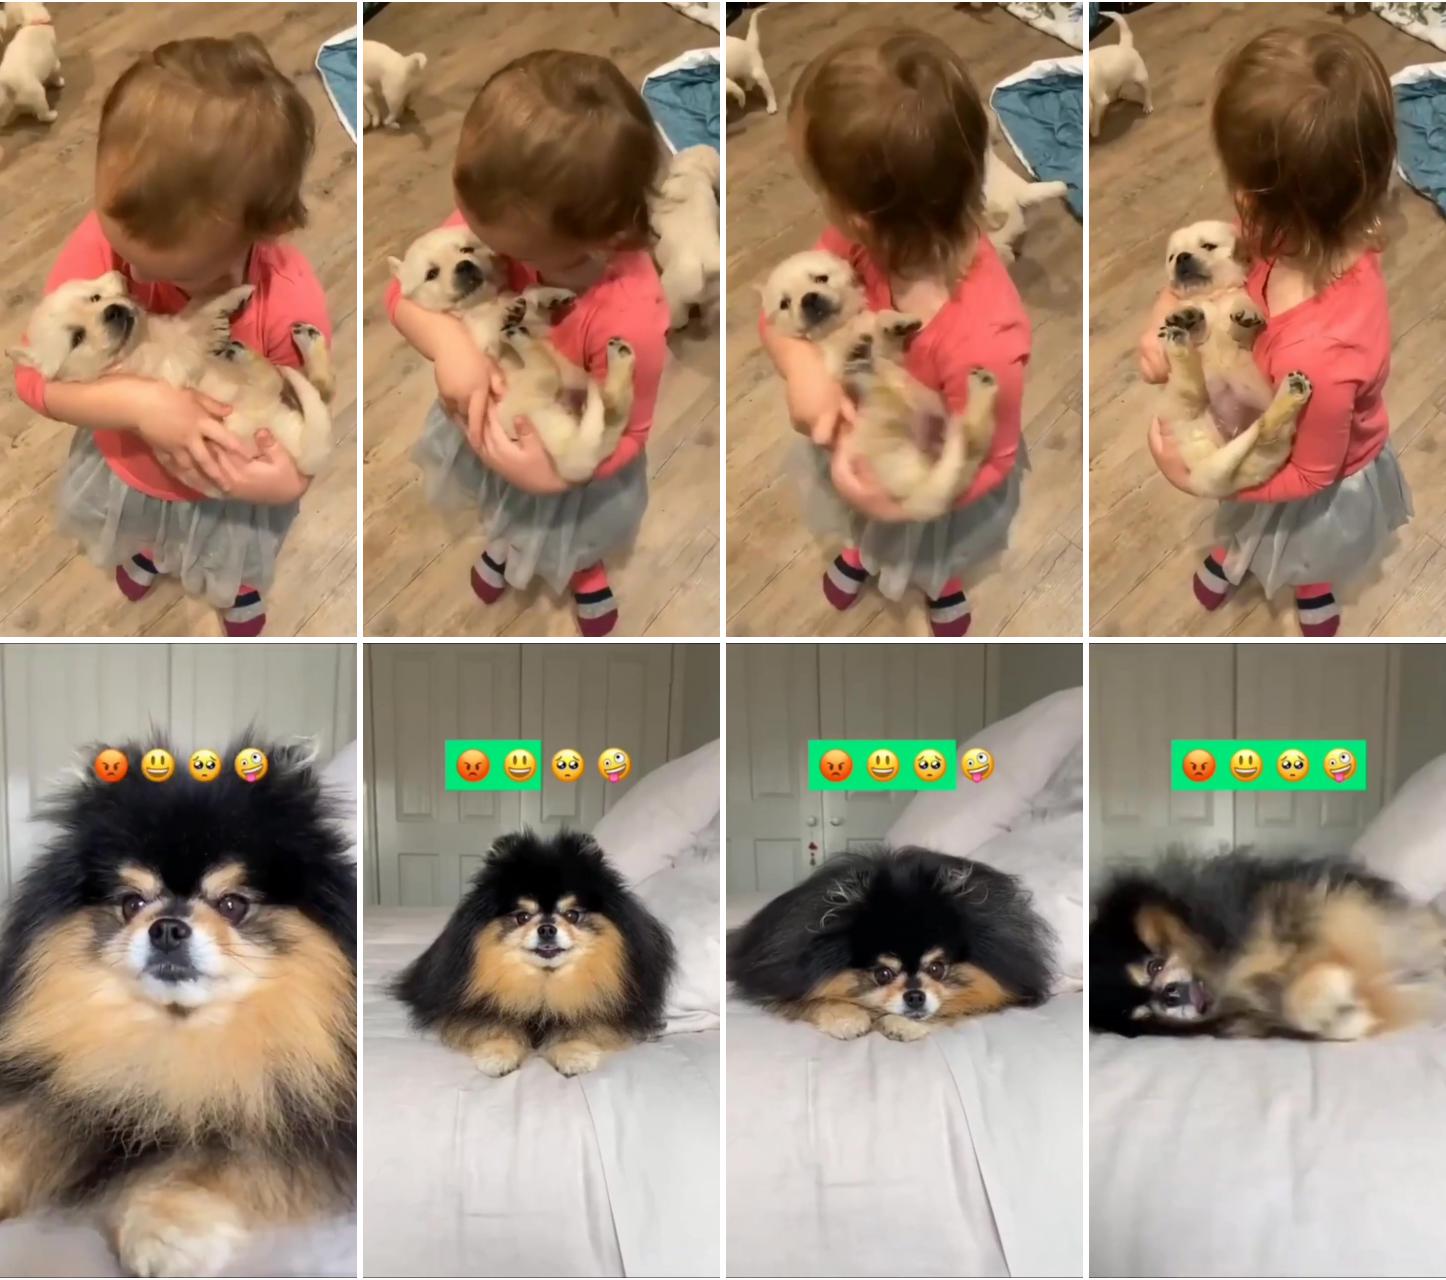 Cute video golden retriever puppy; cute dog expression 